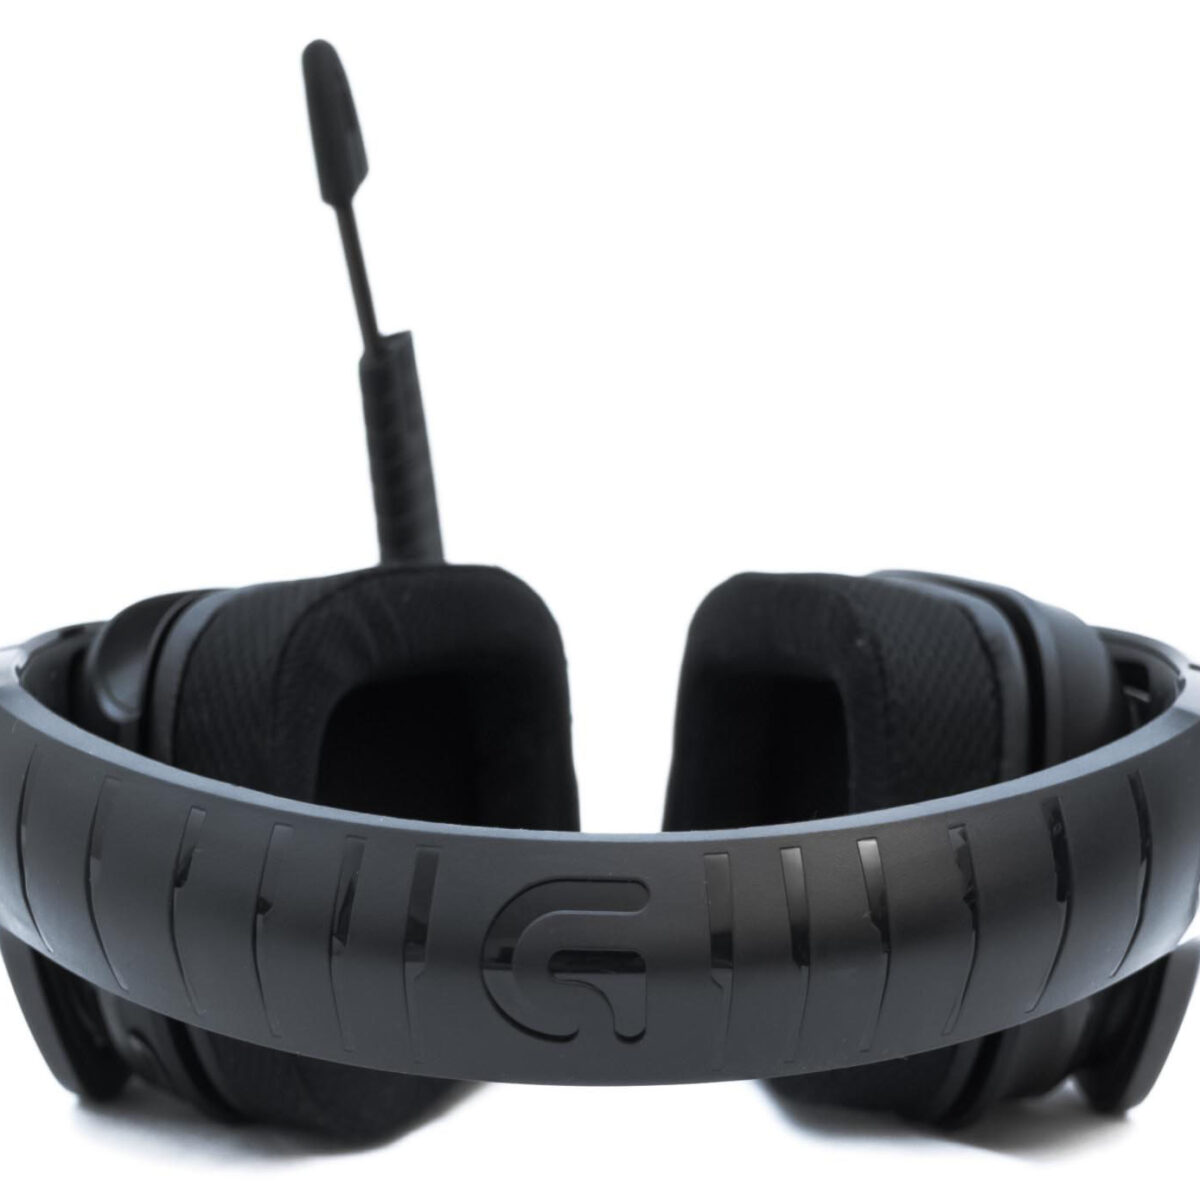 Logitech G633 Spectrum RGB 7.1 Surround Sound Headset Review – Techgage